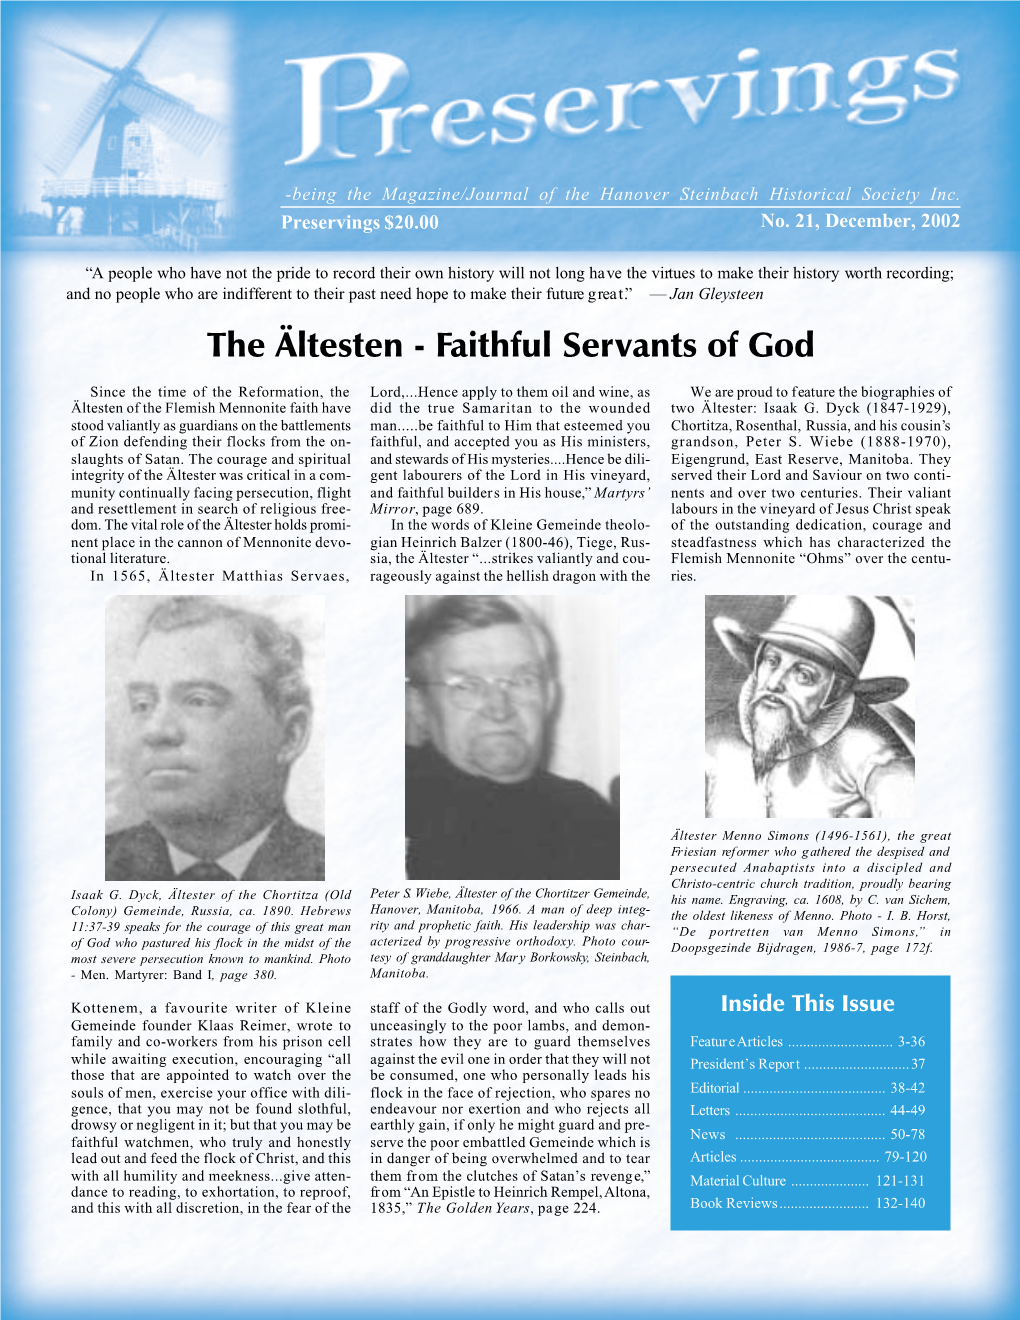 Issue No. 21, December 2002